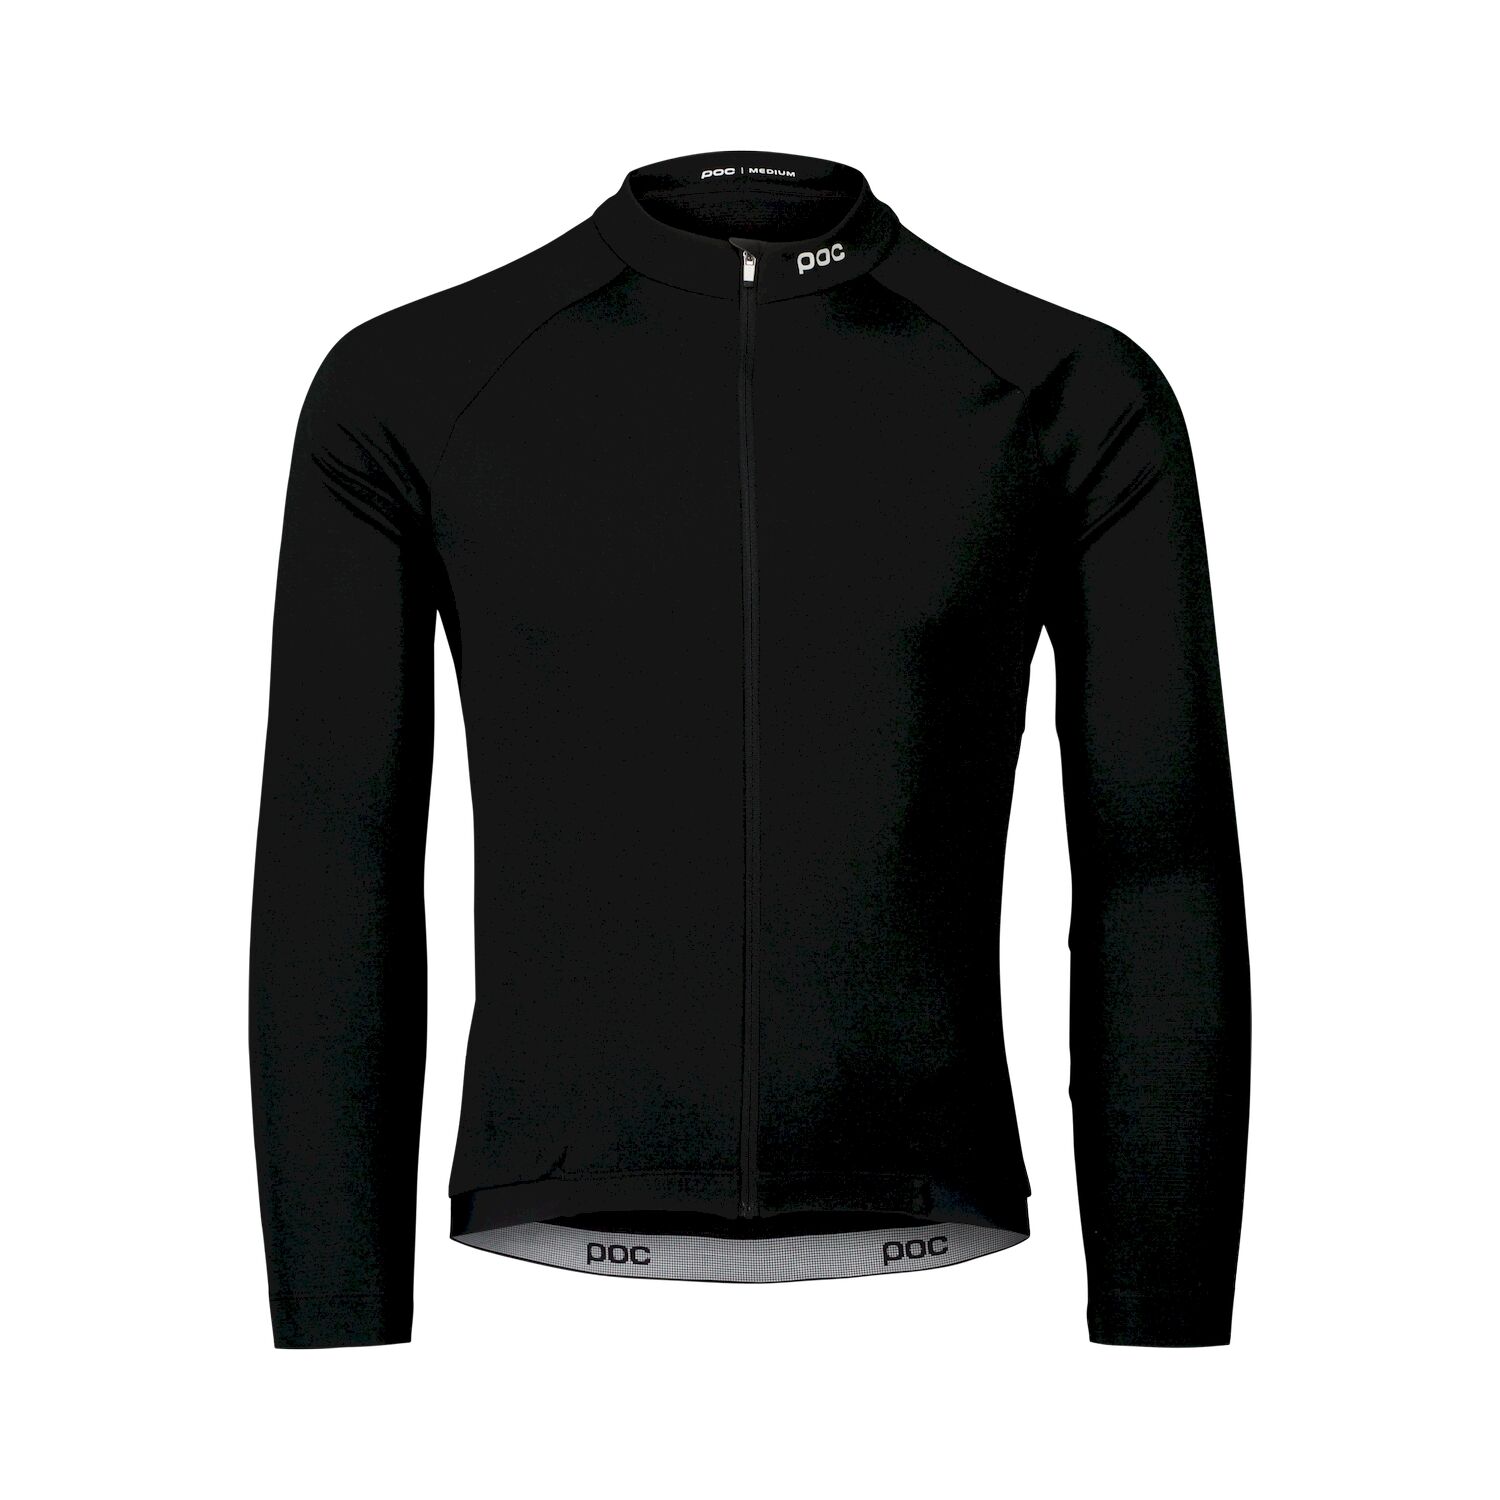 Poc Thermal Lite LS Jersey - Cycling jersey - Men's